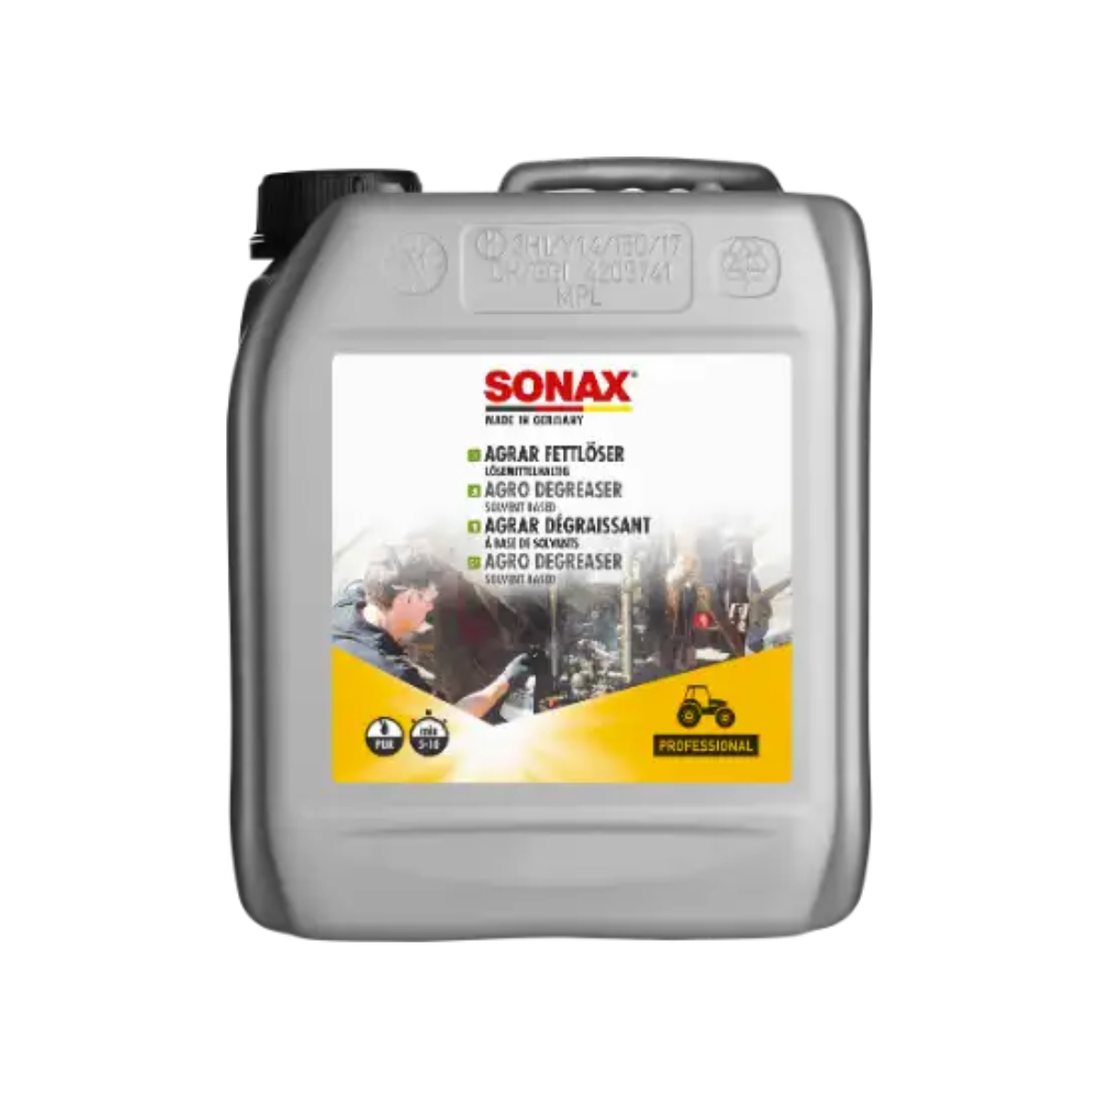 SONAX Agro Grease Dissolver - Oliebaseret 5L - BilligStyling